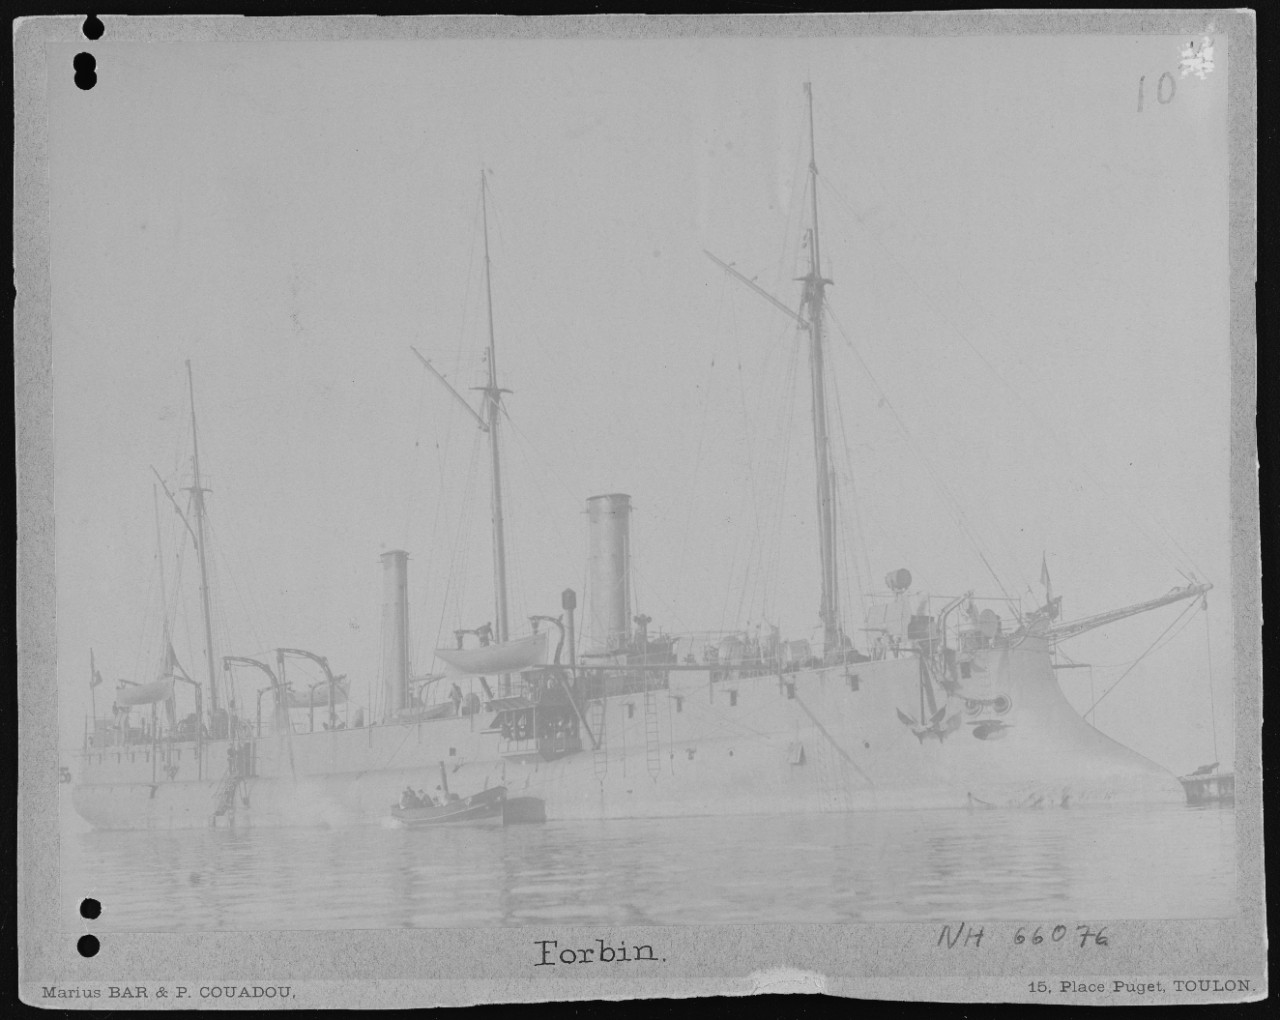 FORBIN (French cruiser, 1888)